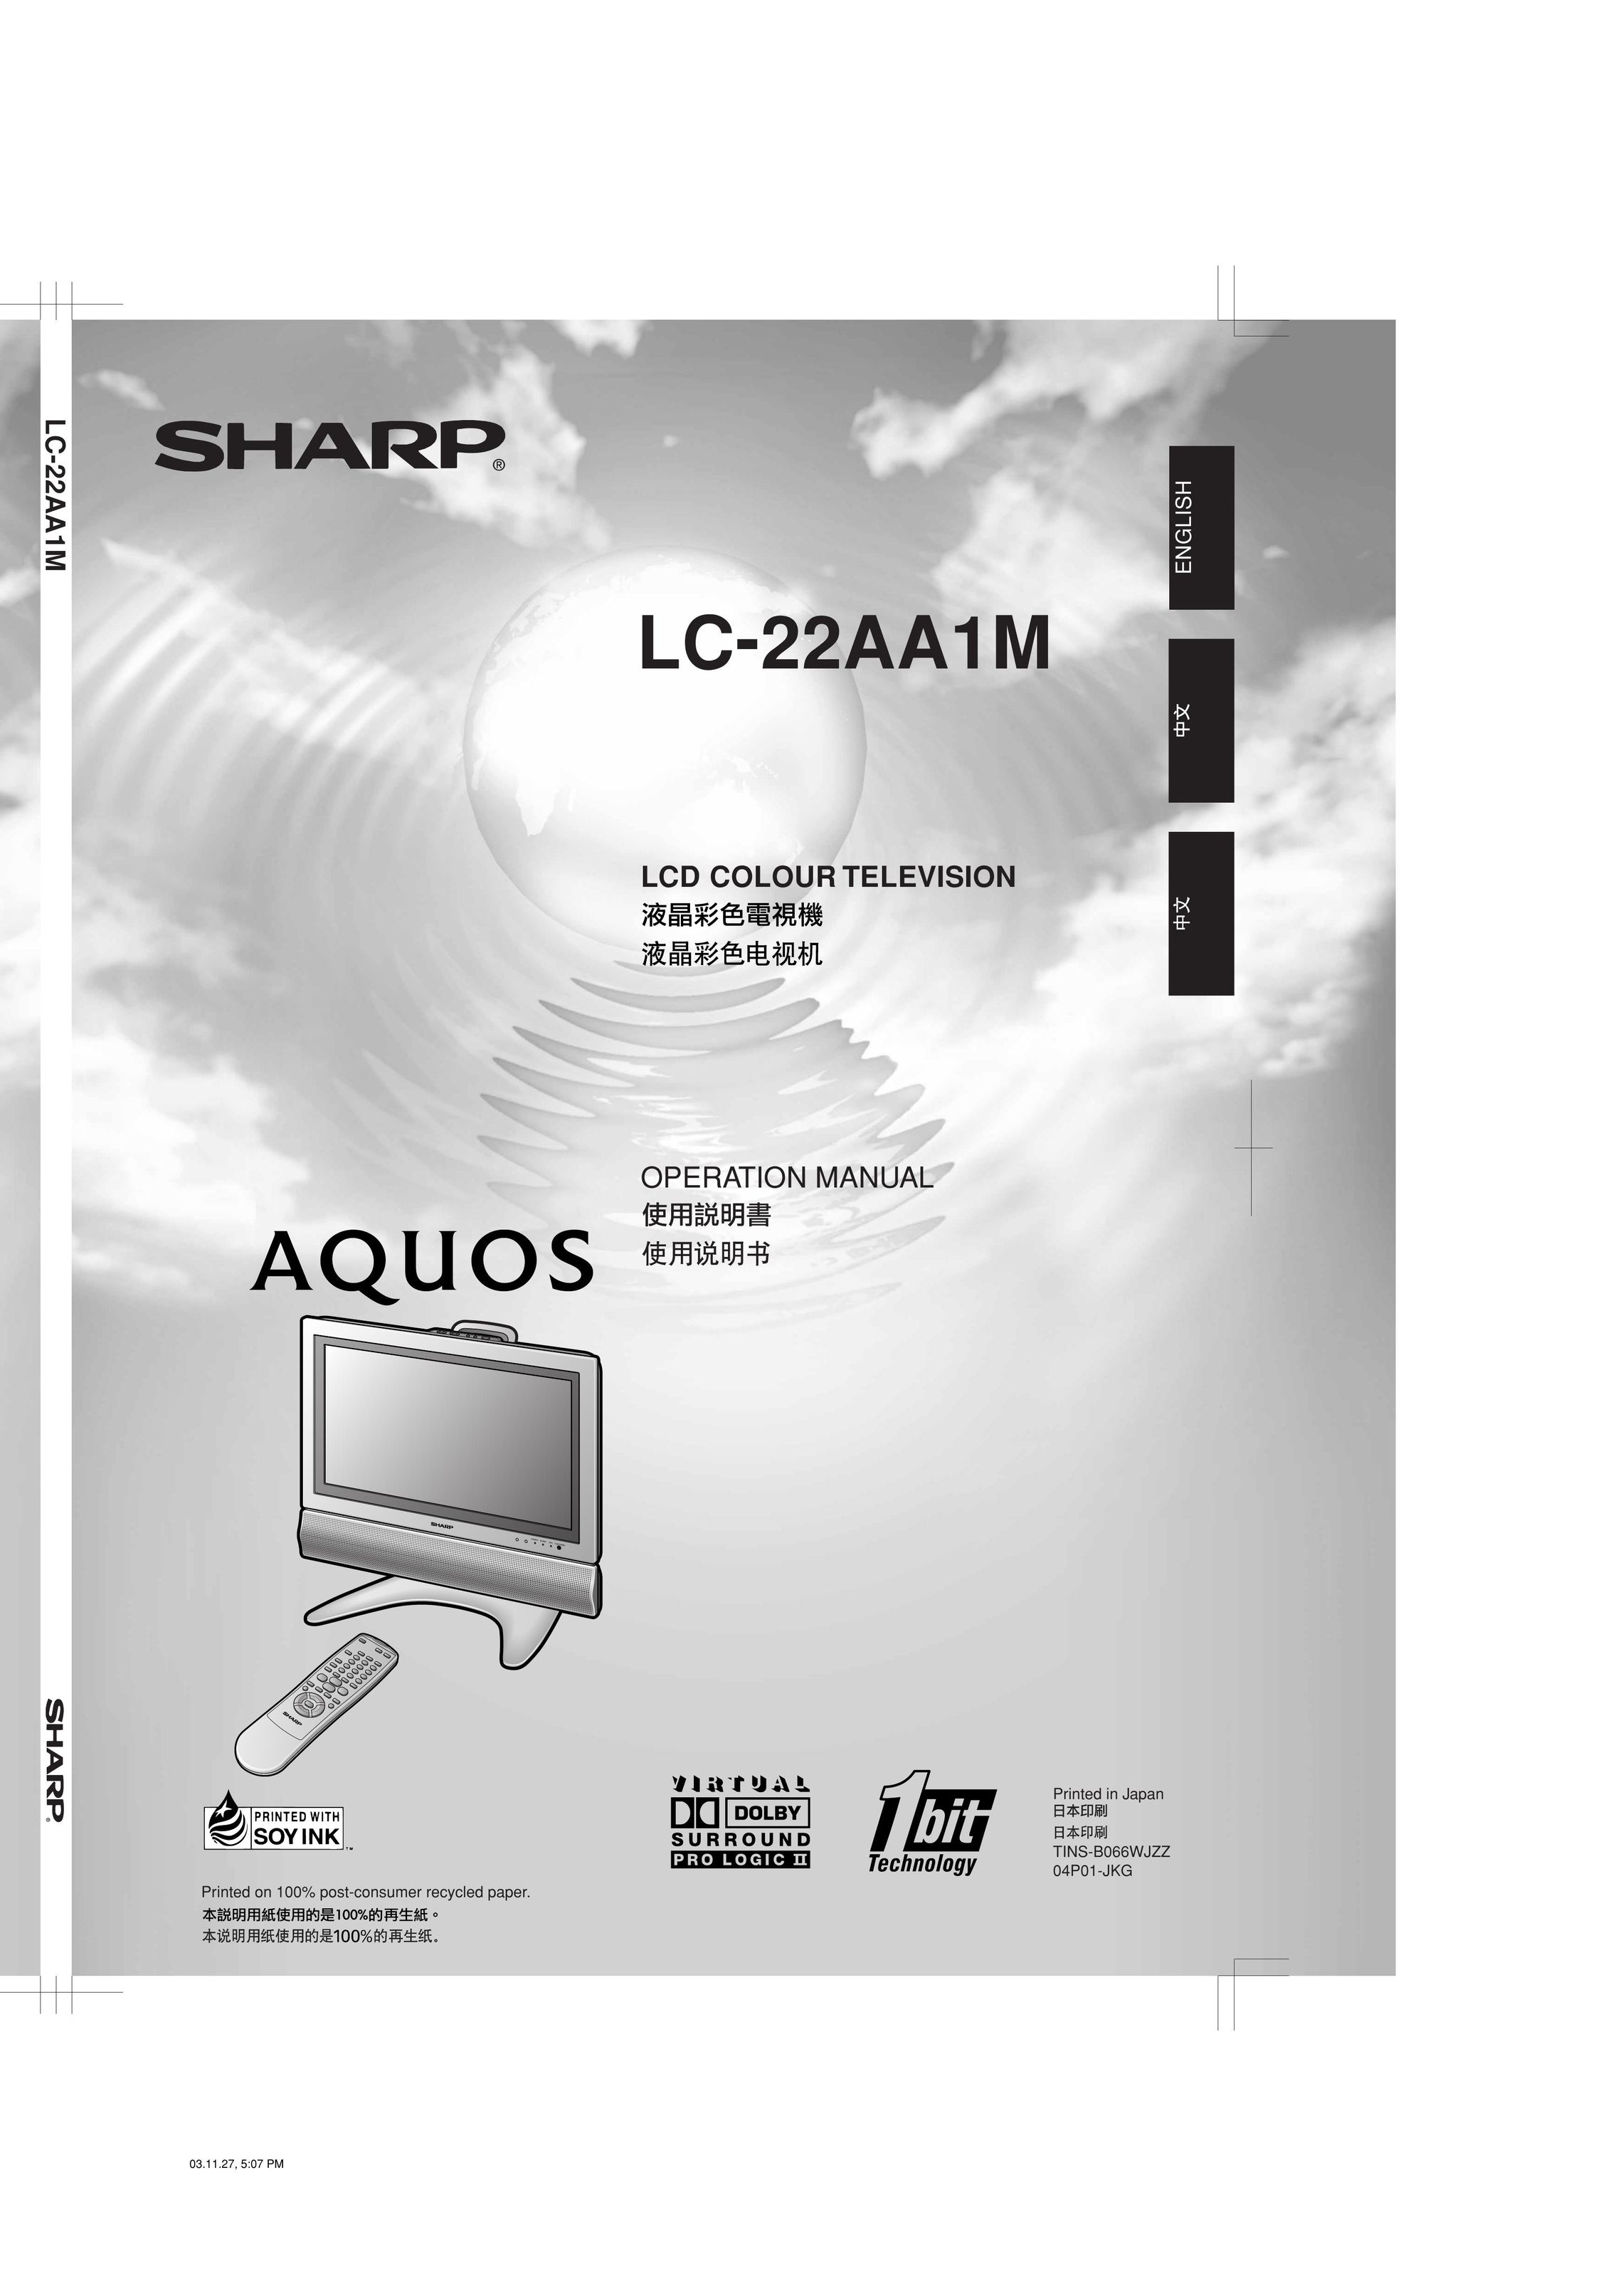 Sharp LC-22AA1M Satellite TV System User Manual